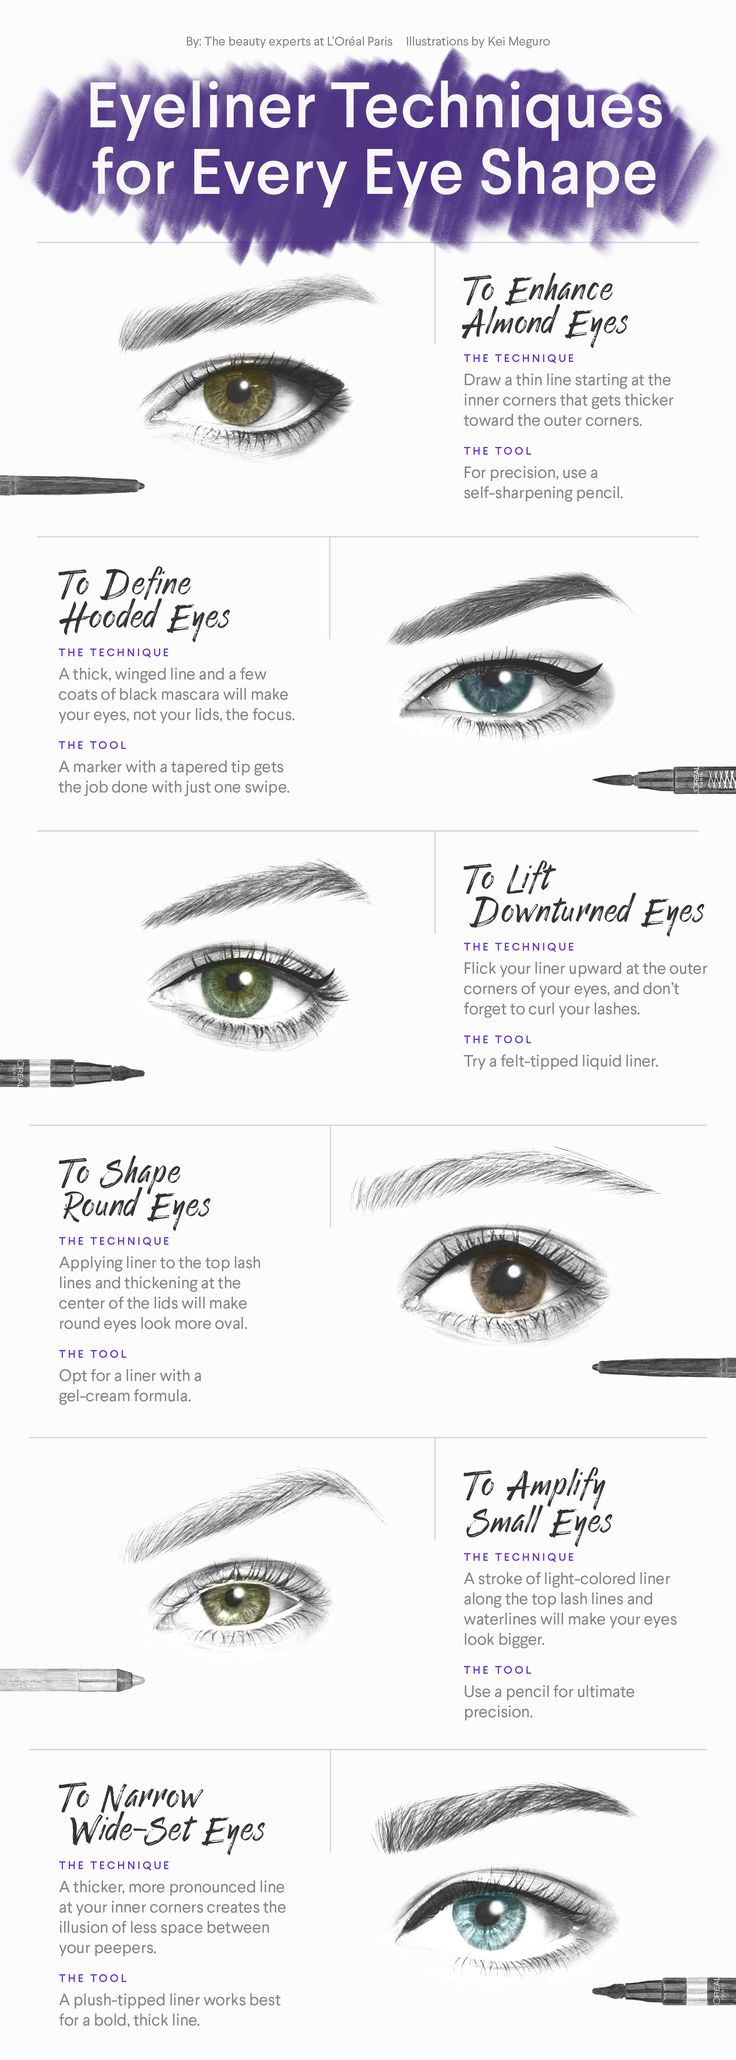 The best eyeliner techniques for every eye shape.